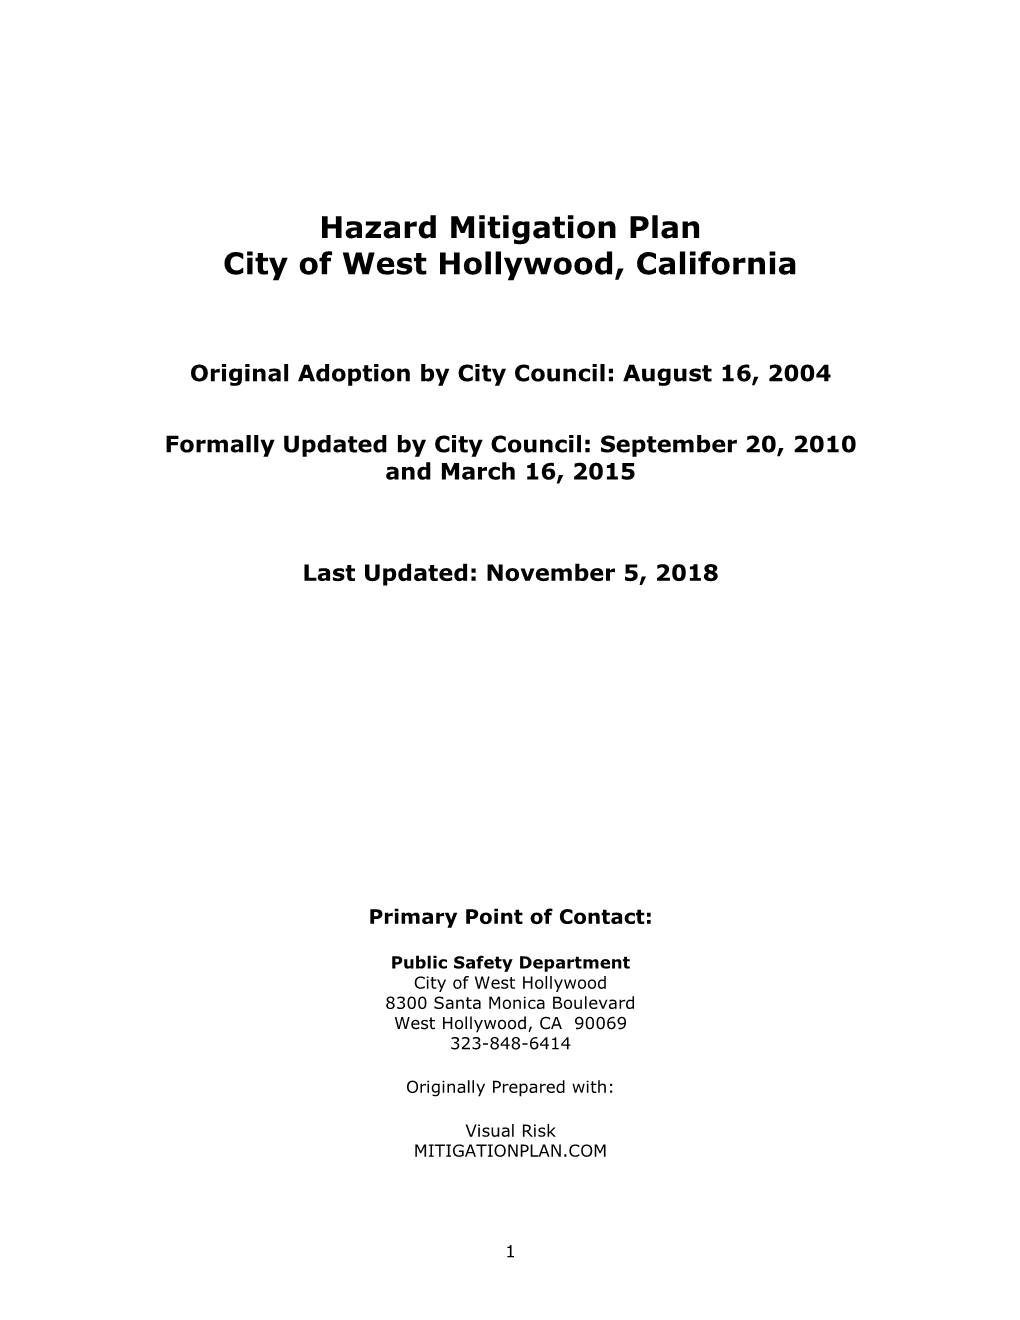 Hazard Mitigation Plan City of West Hollywood, California